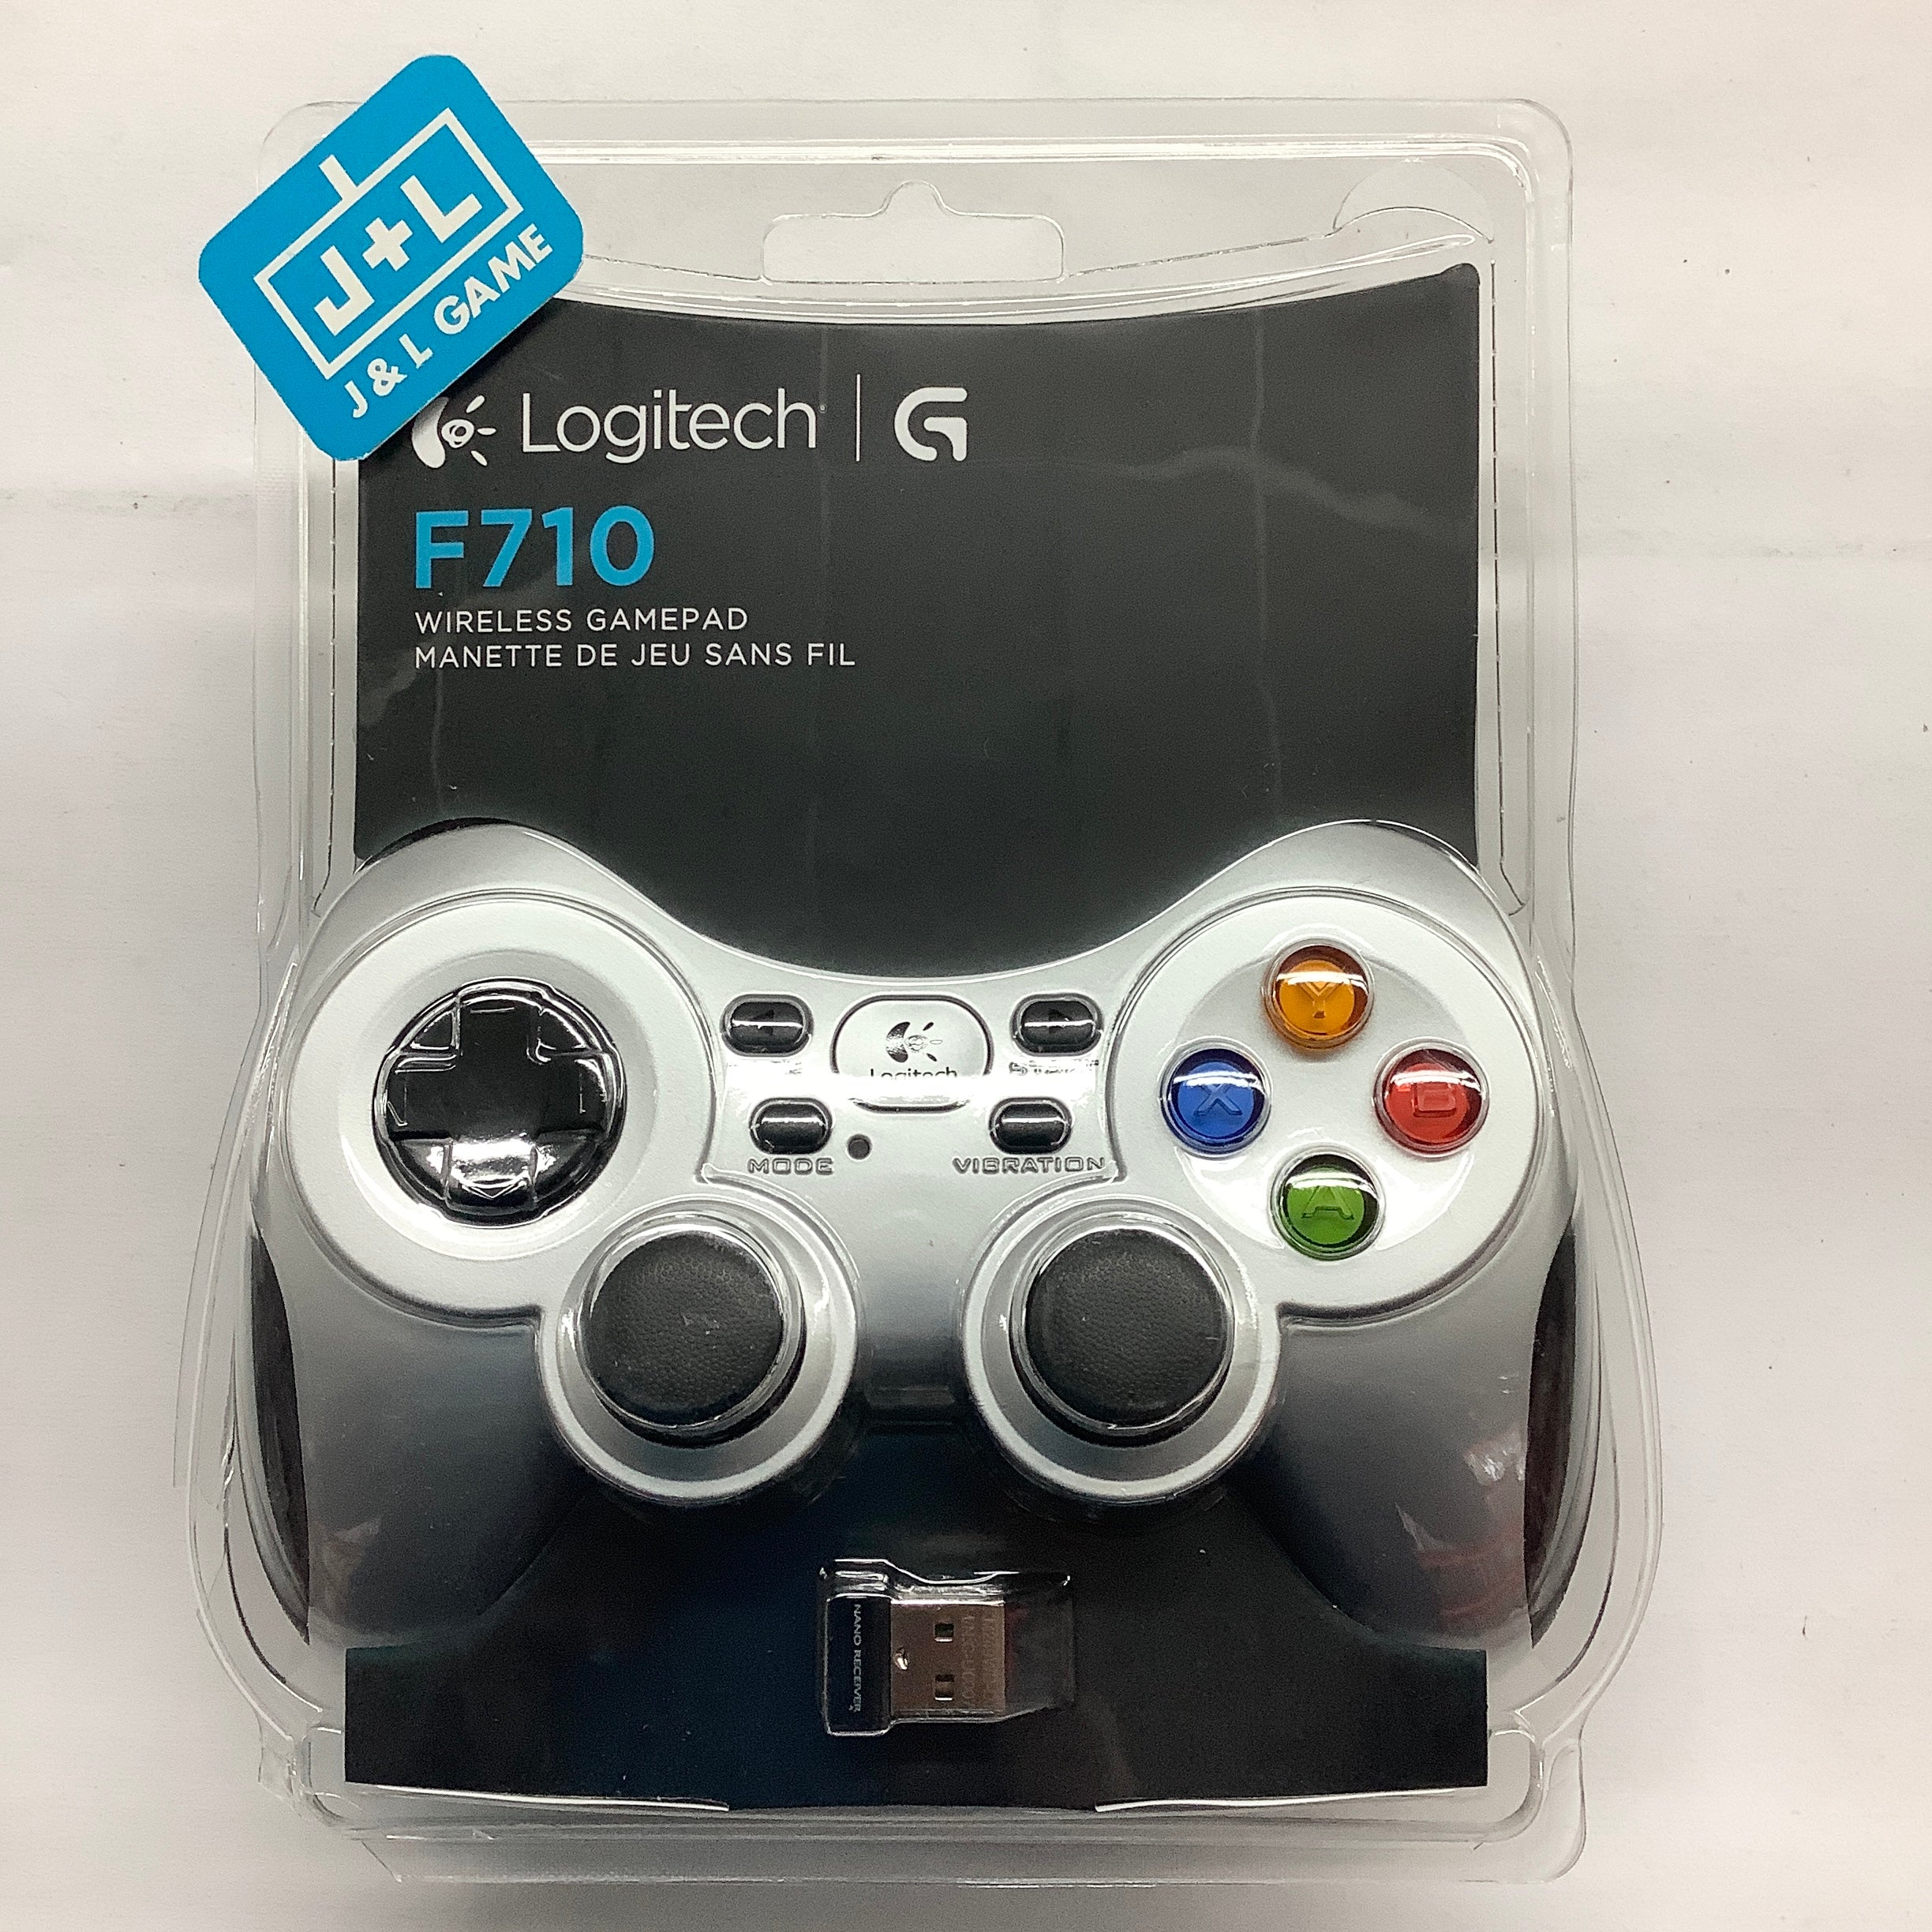 Logitech G Gamepad F310 - Manette PC - Garantie 3 ans LDLC